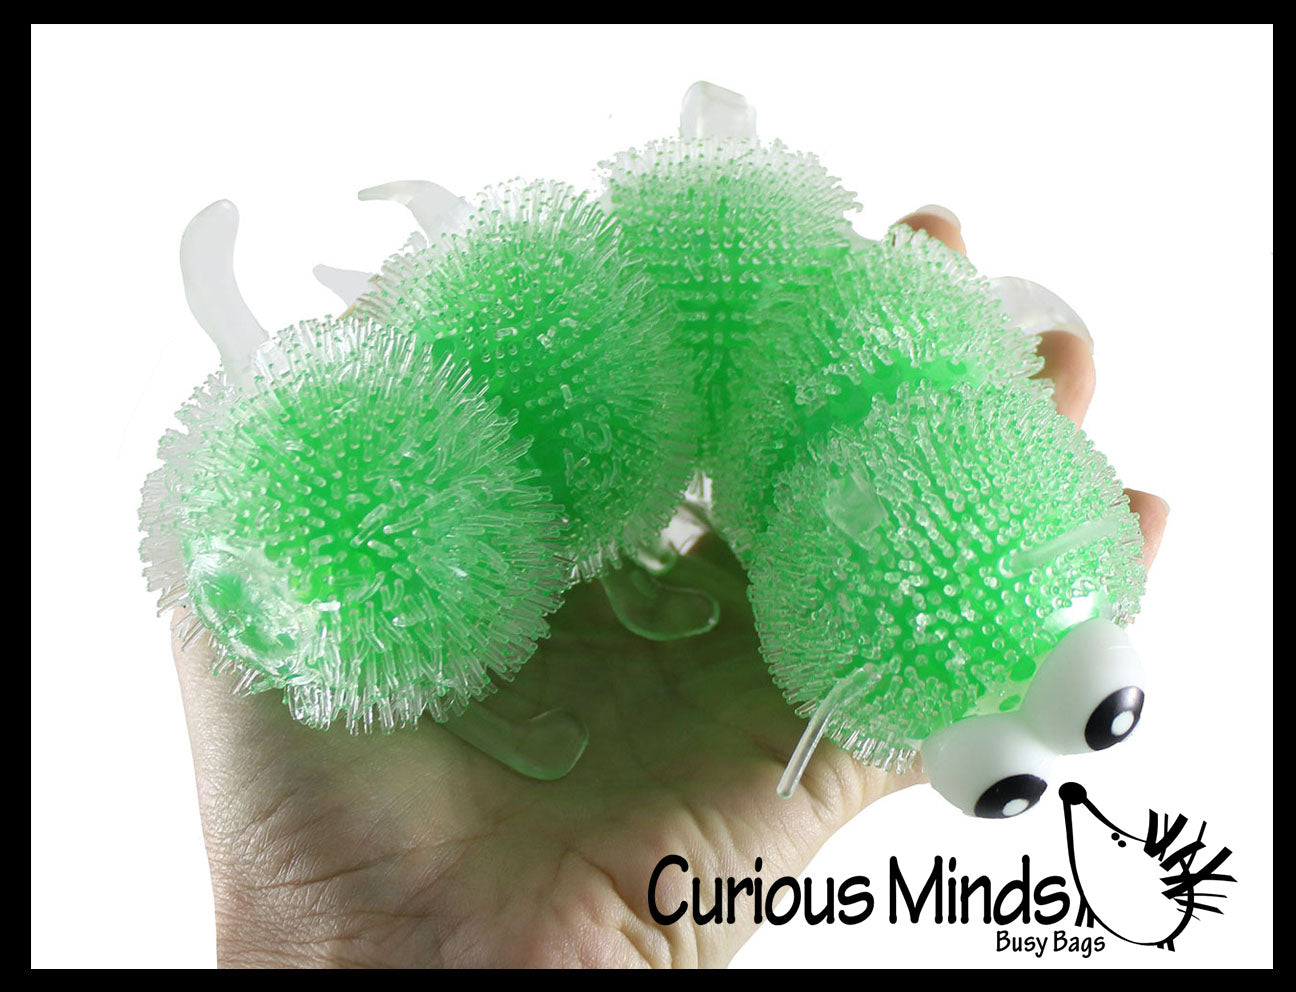 Jumbo Caterpillar Water Bead Filled Squeeze Stress Ball - Sensory, Stress, Fidget Toy - Soothing